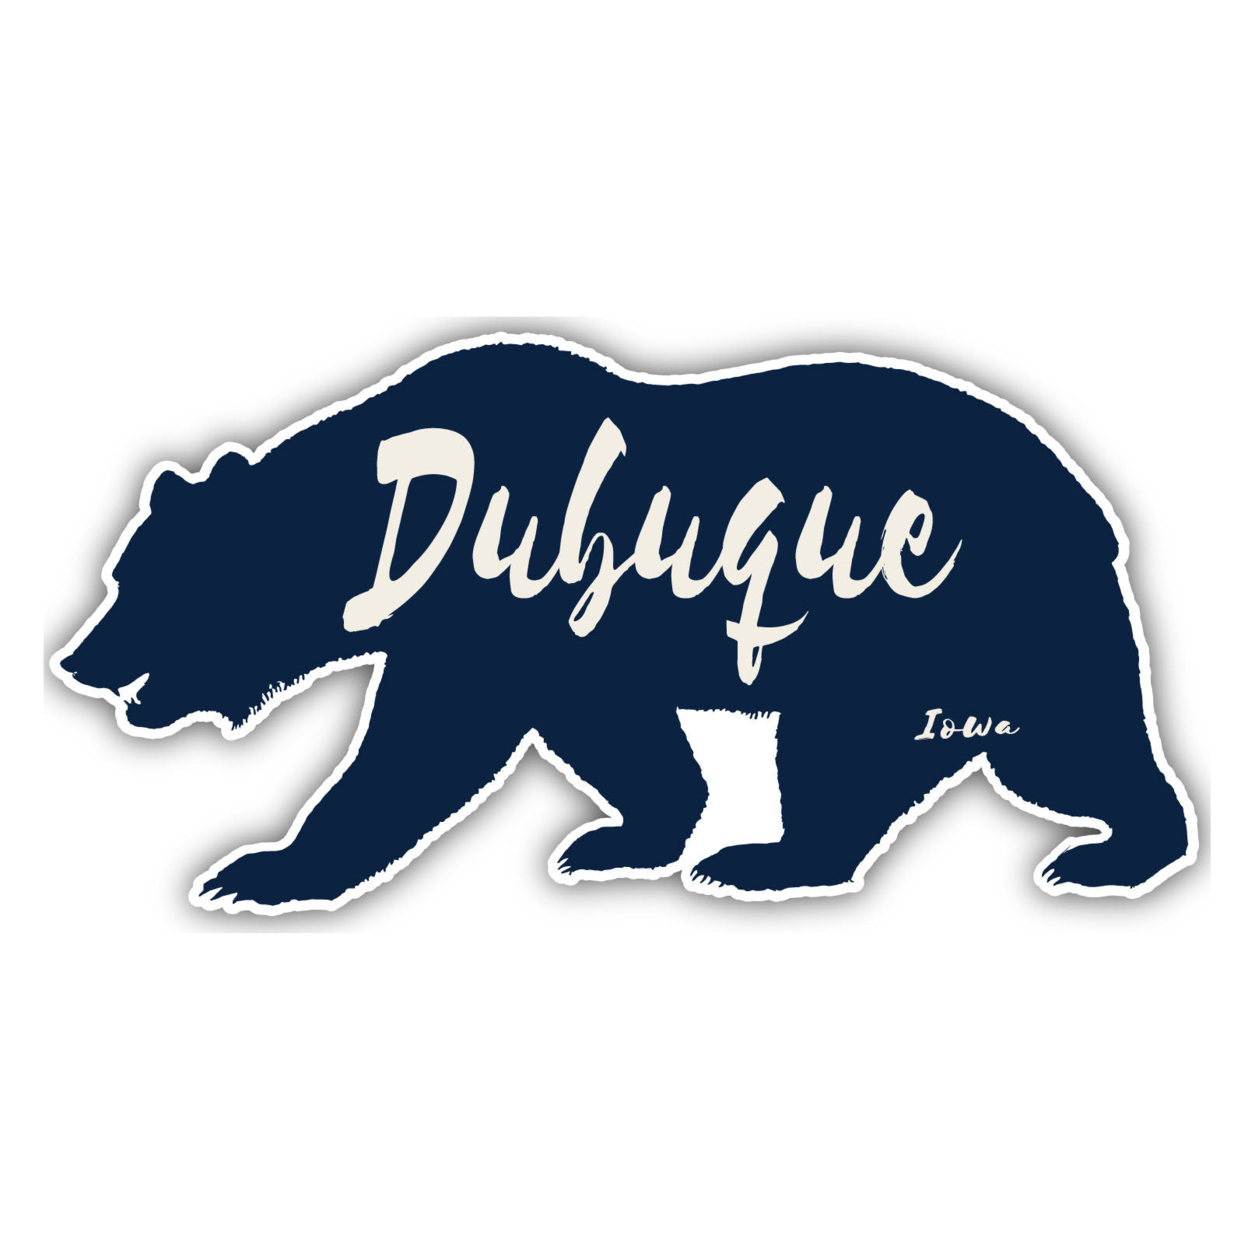 Dubuque Iowa Souvenir Decorative Stickers (Choose Theme And Size) - Single Unit, 12-Inch, Great Outdoors